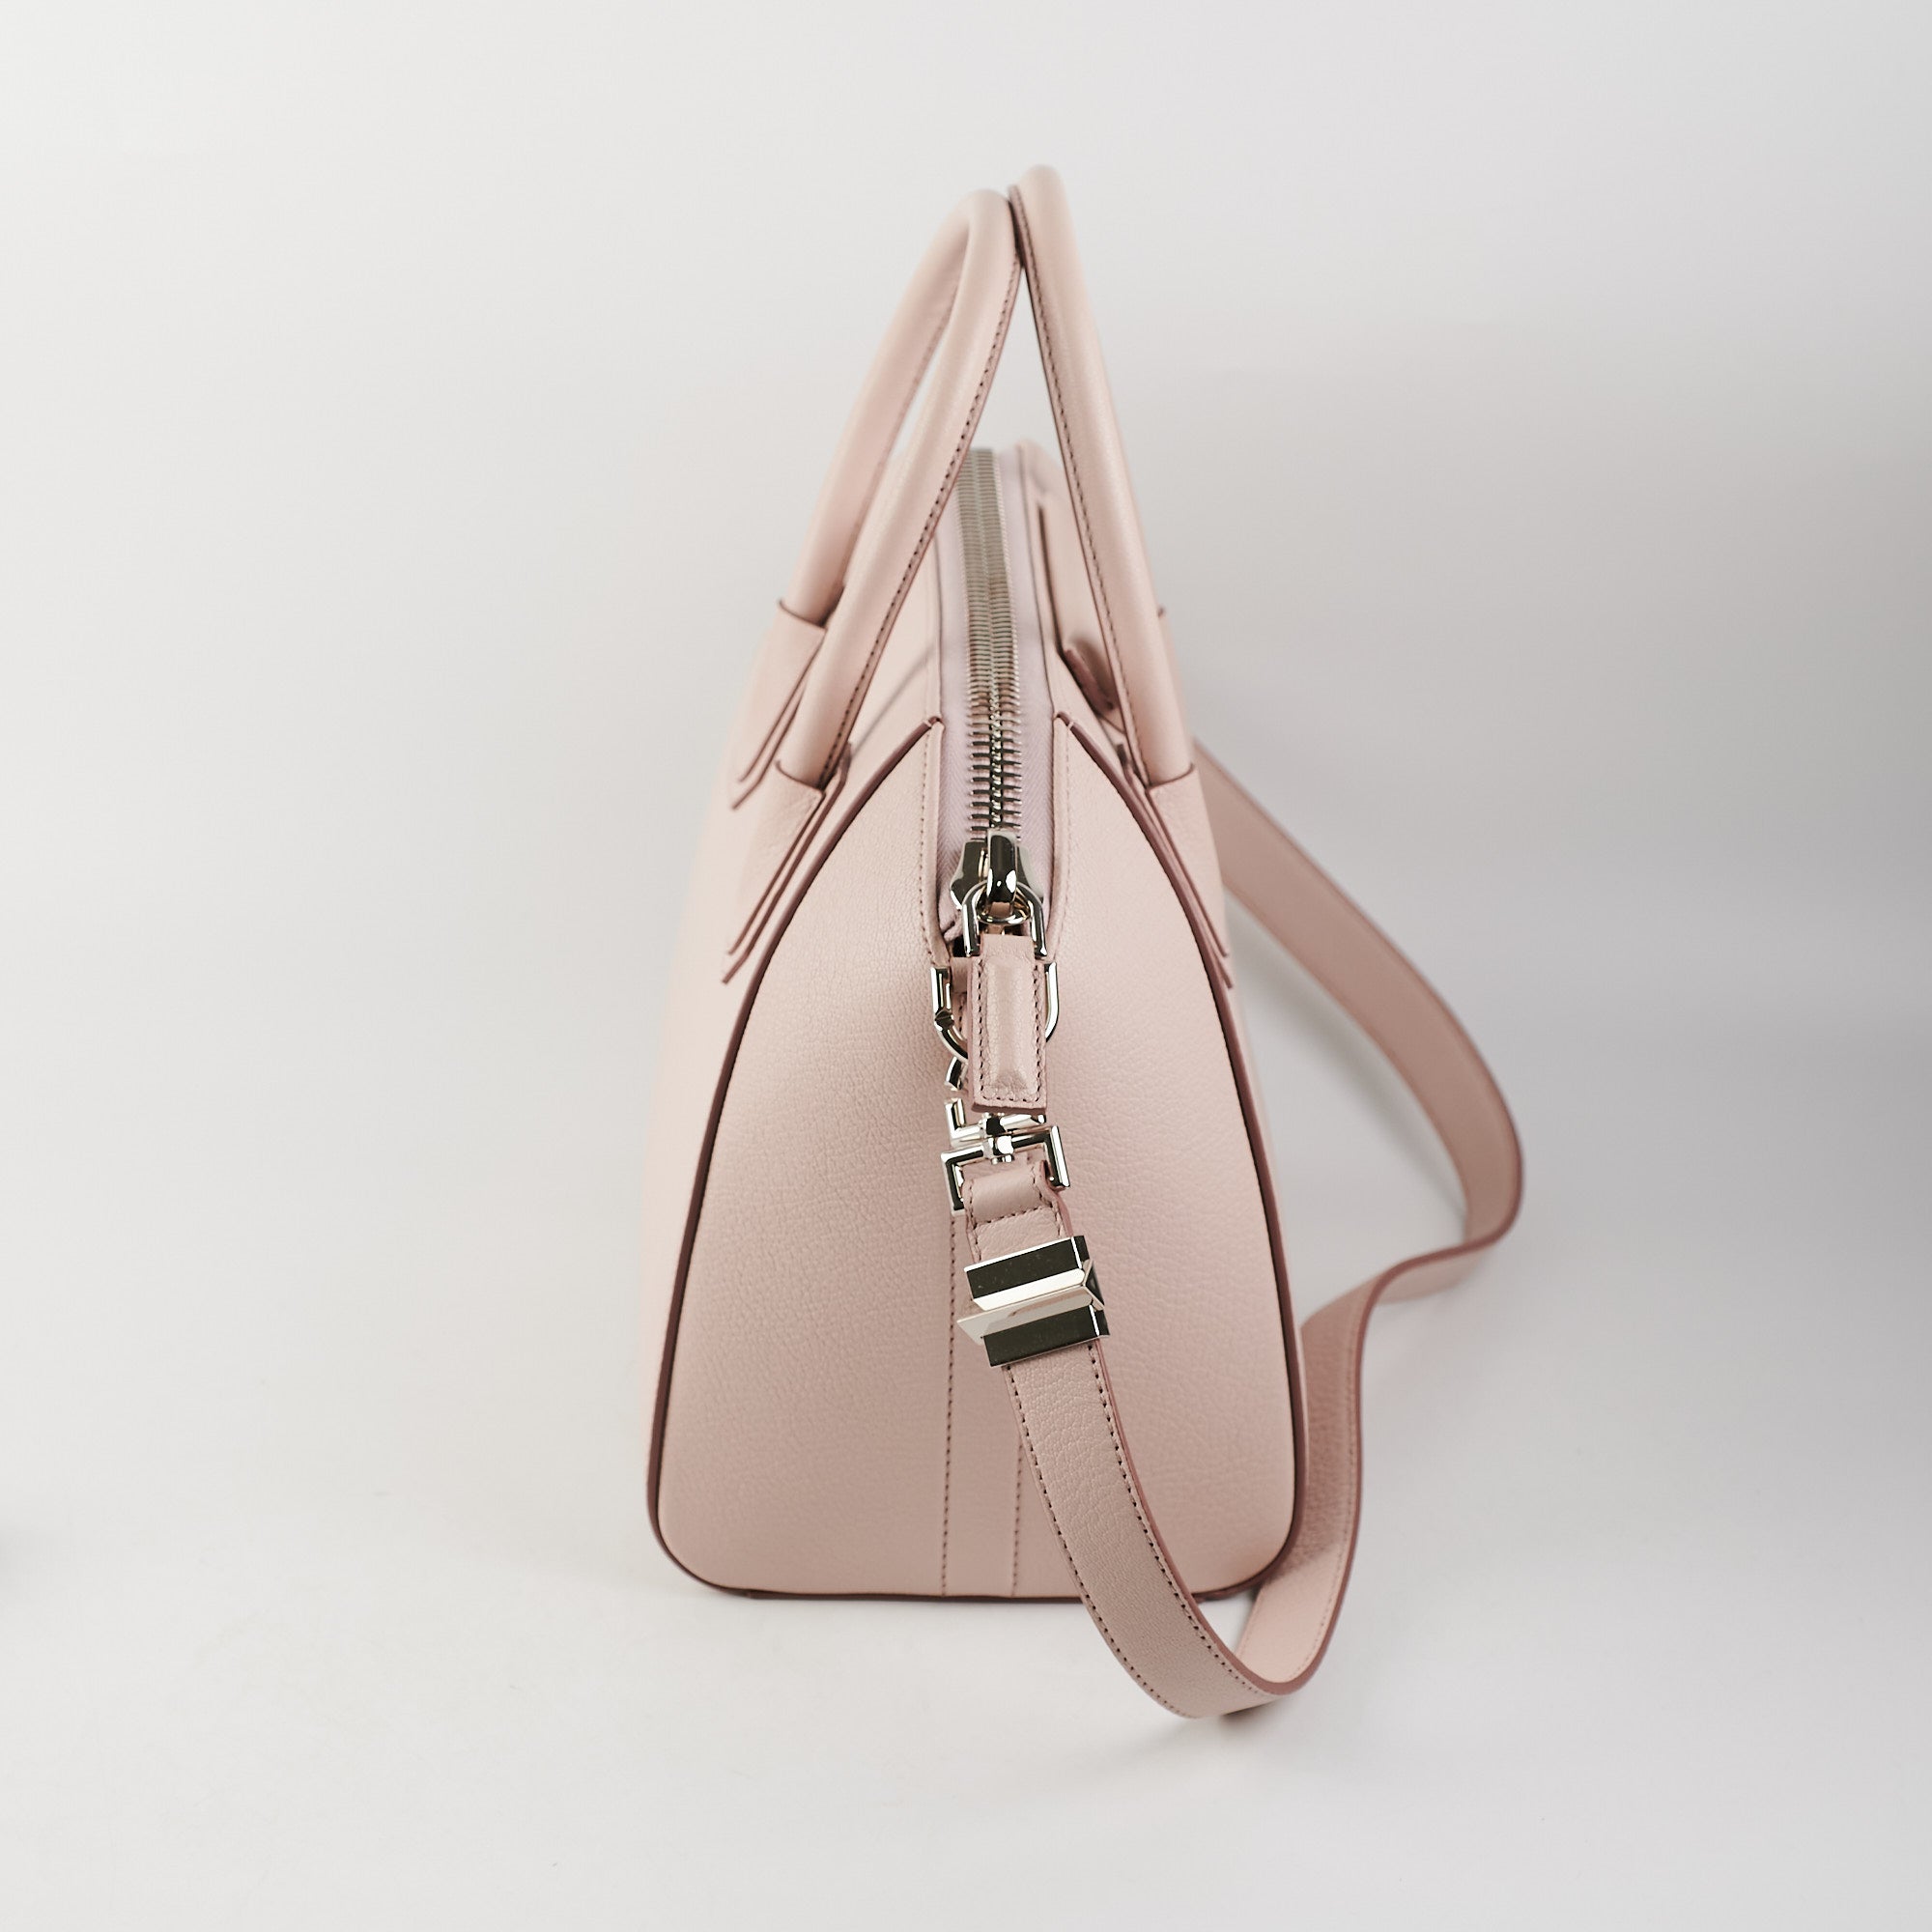 Givenchy Antigona Small Handbag